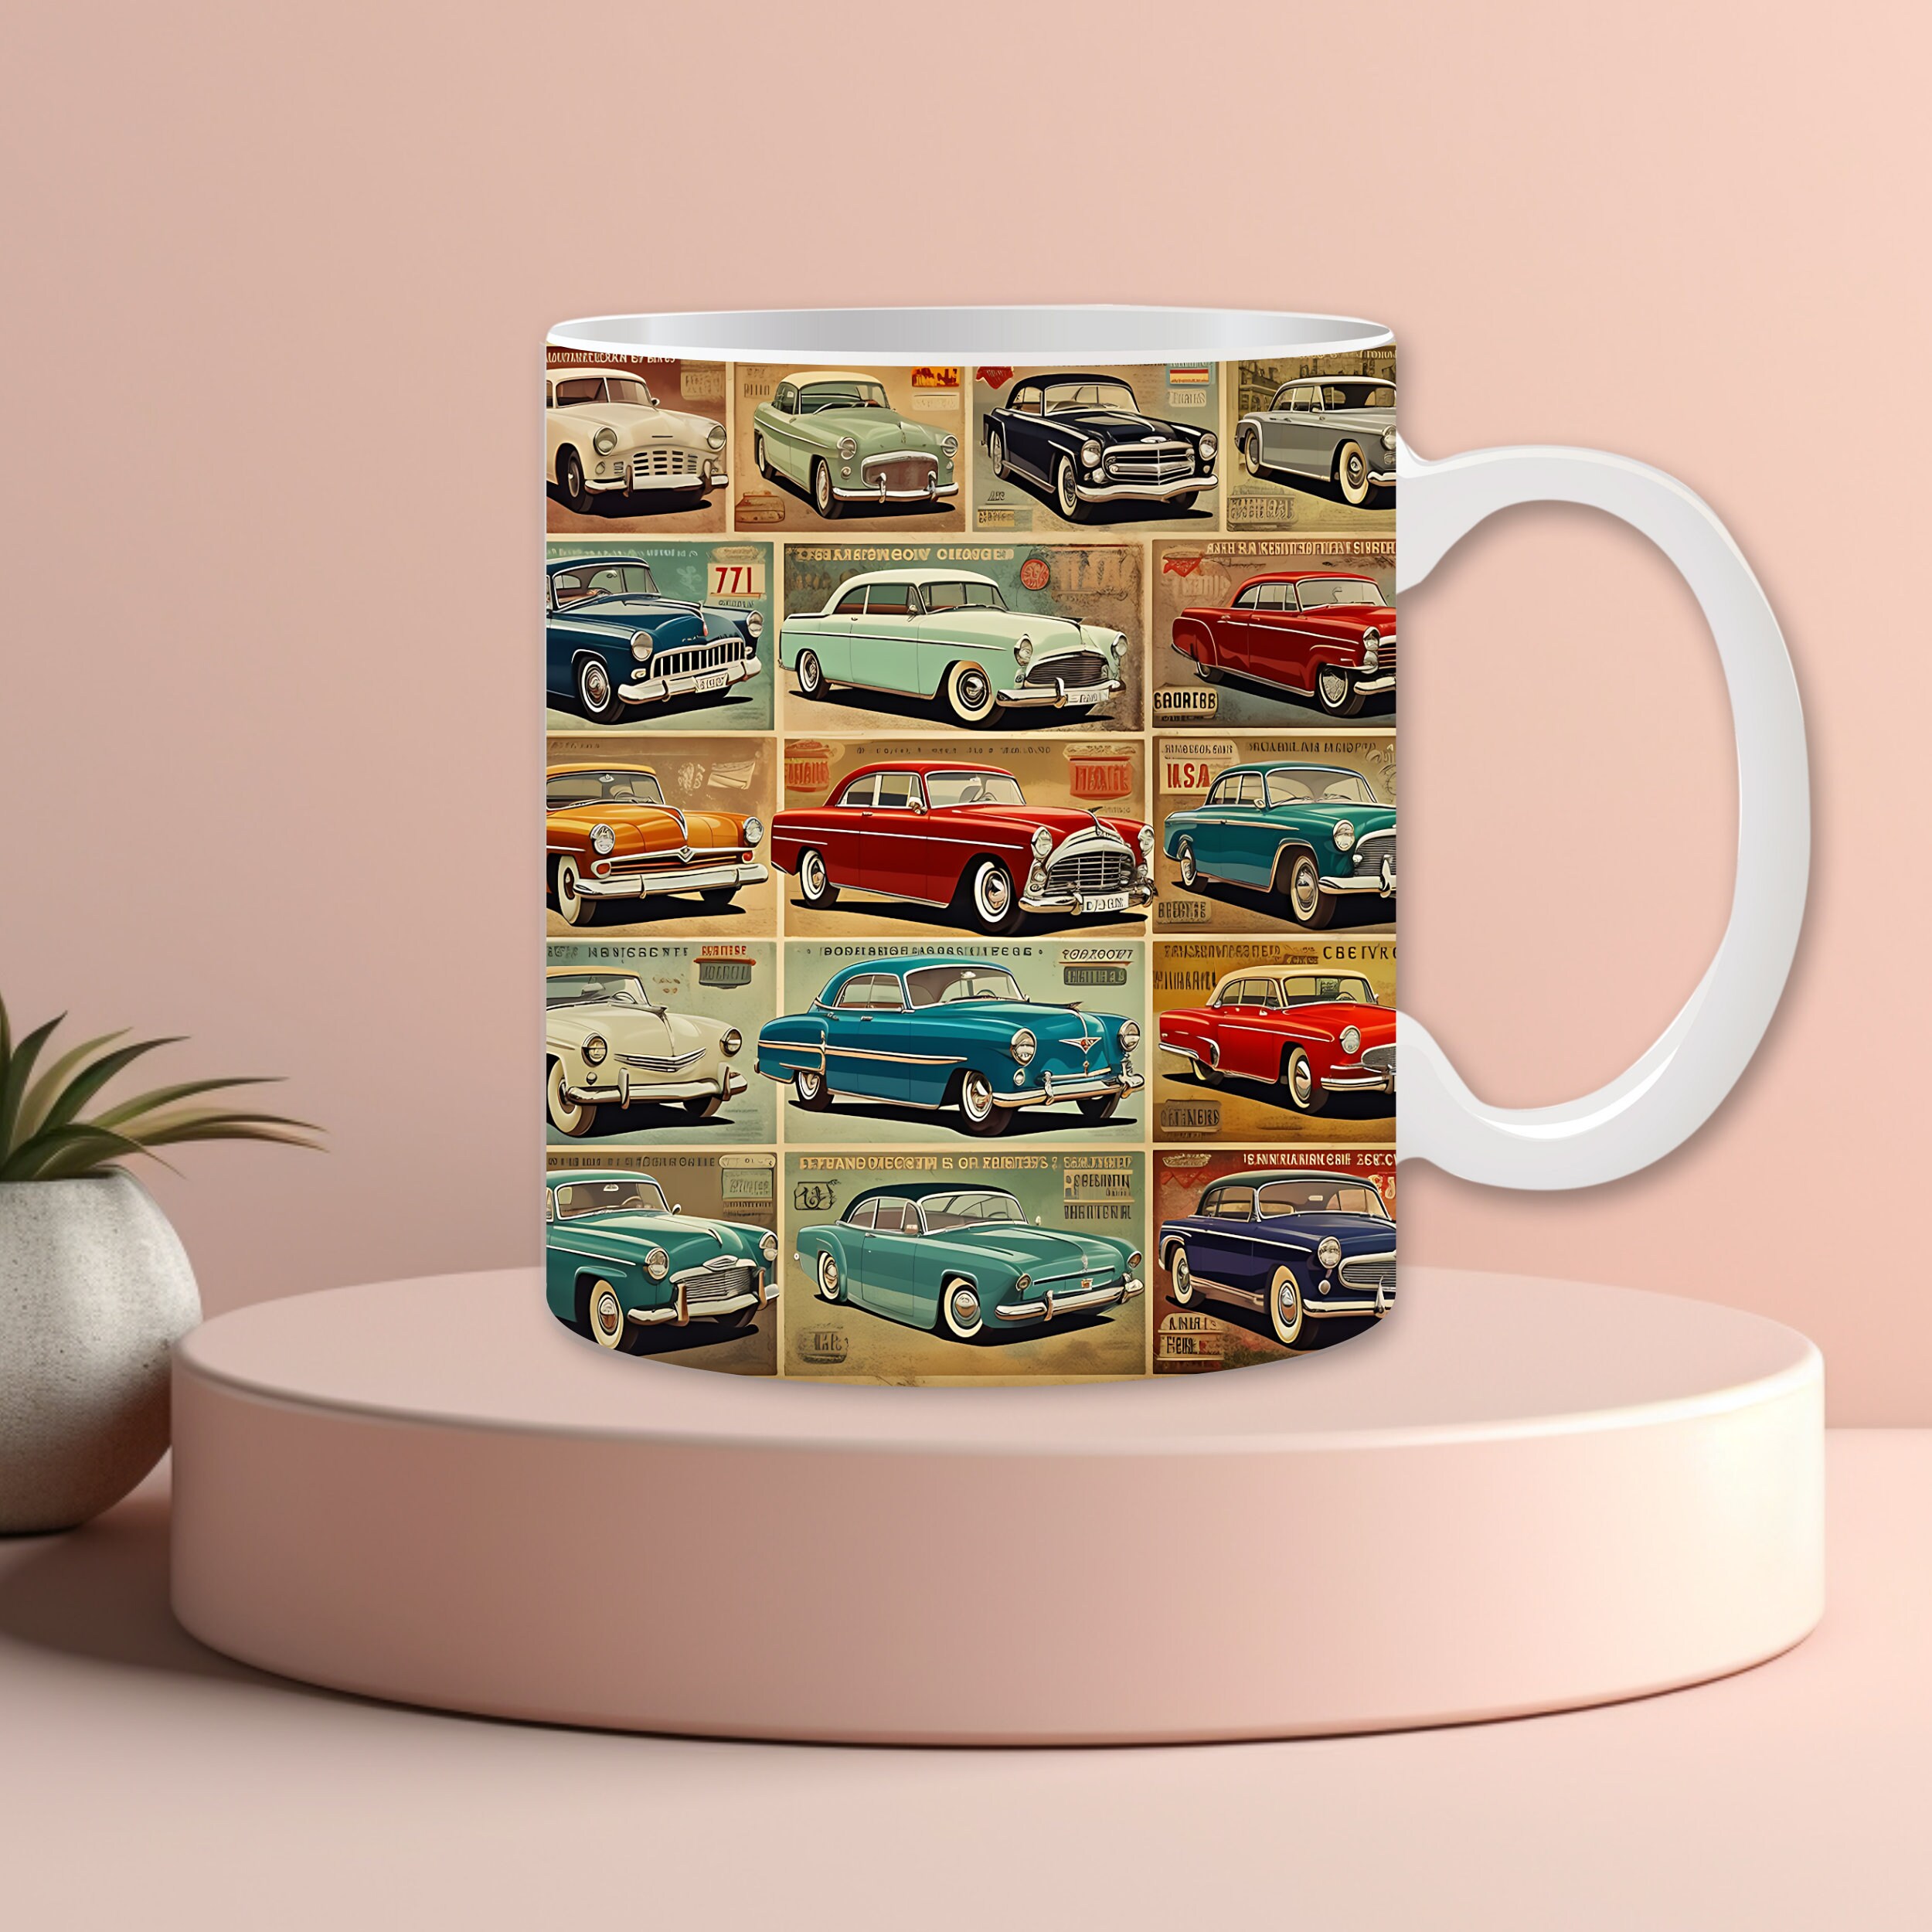 Franklin Automobile, Beige 2 Handled Mug With Franklin Advertisement,  Vintage Car Mug, Automobile Collectors Gift, Tea or Coffee Cup 